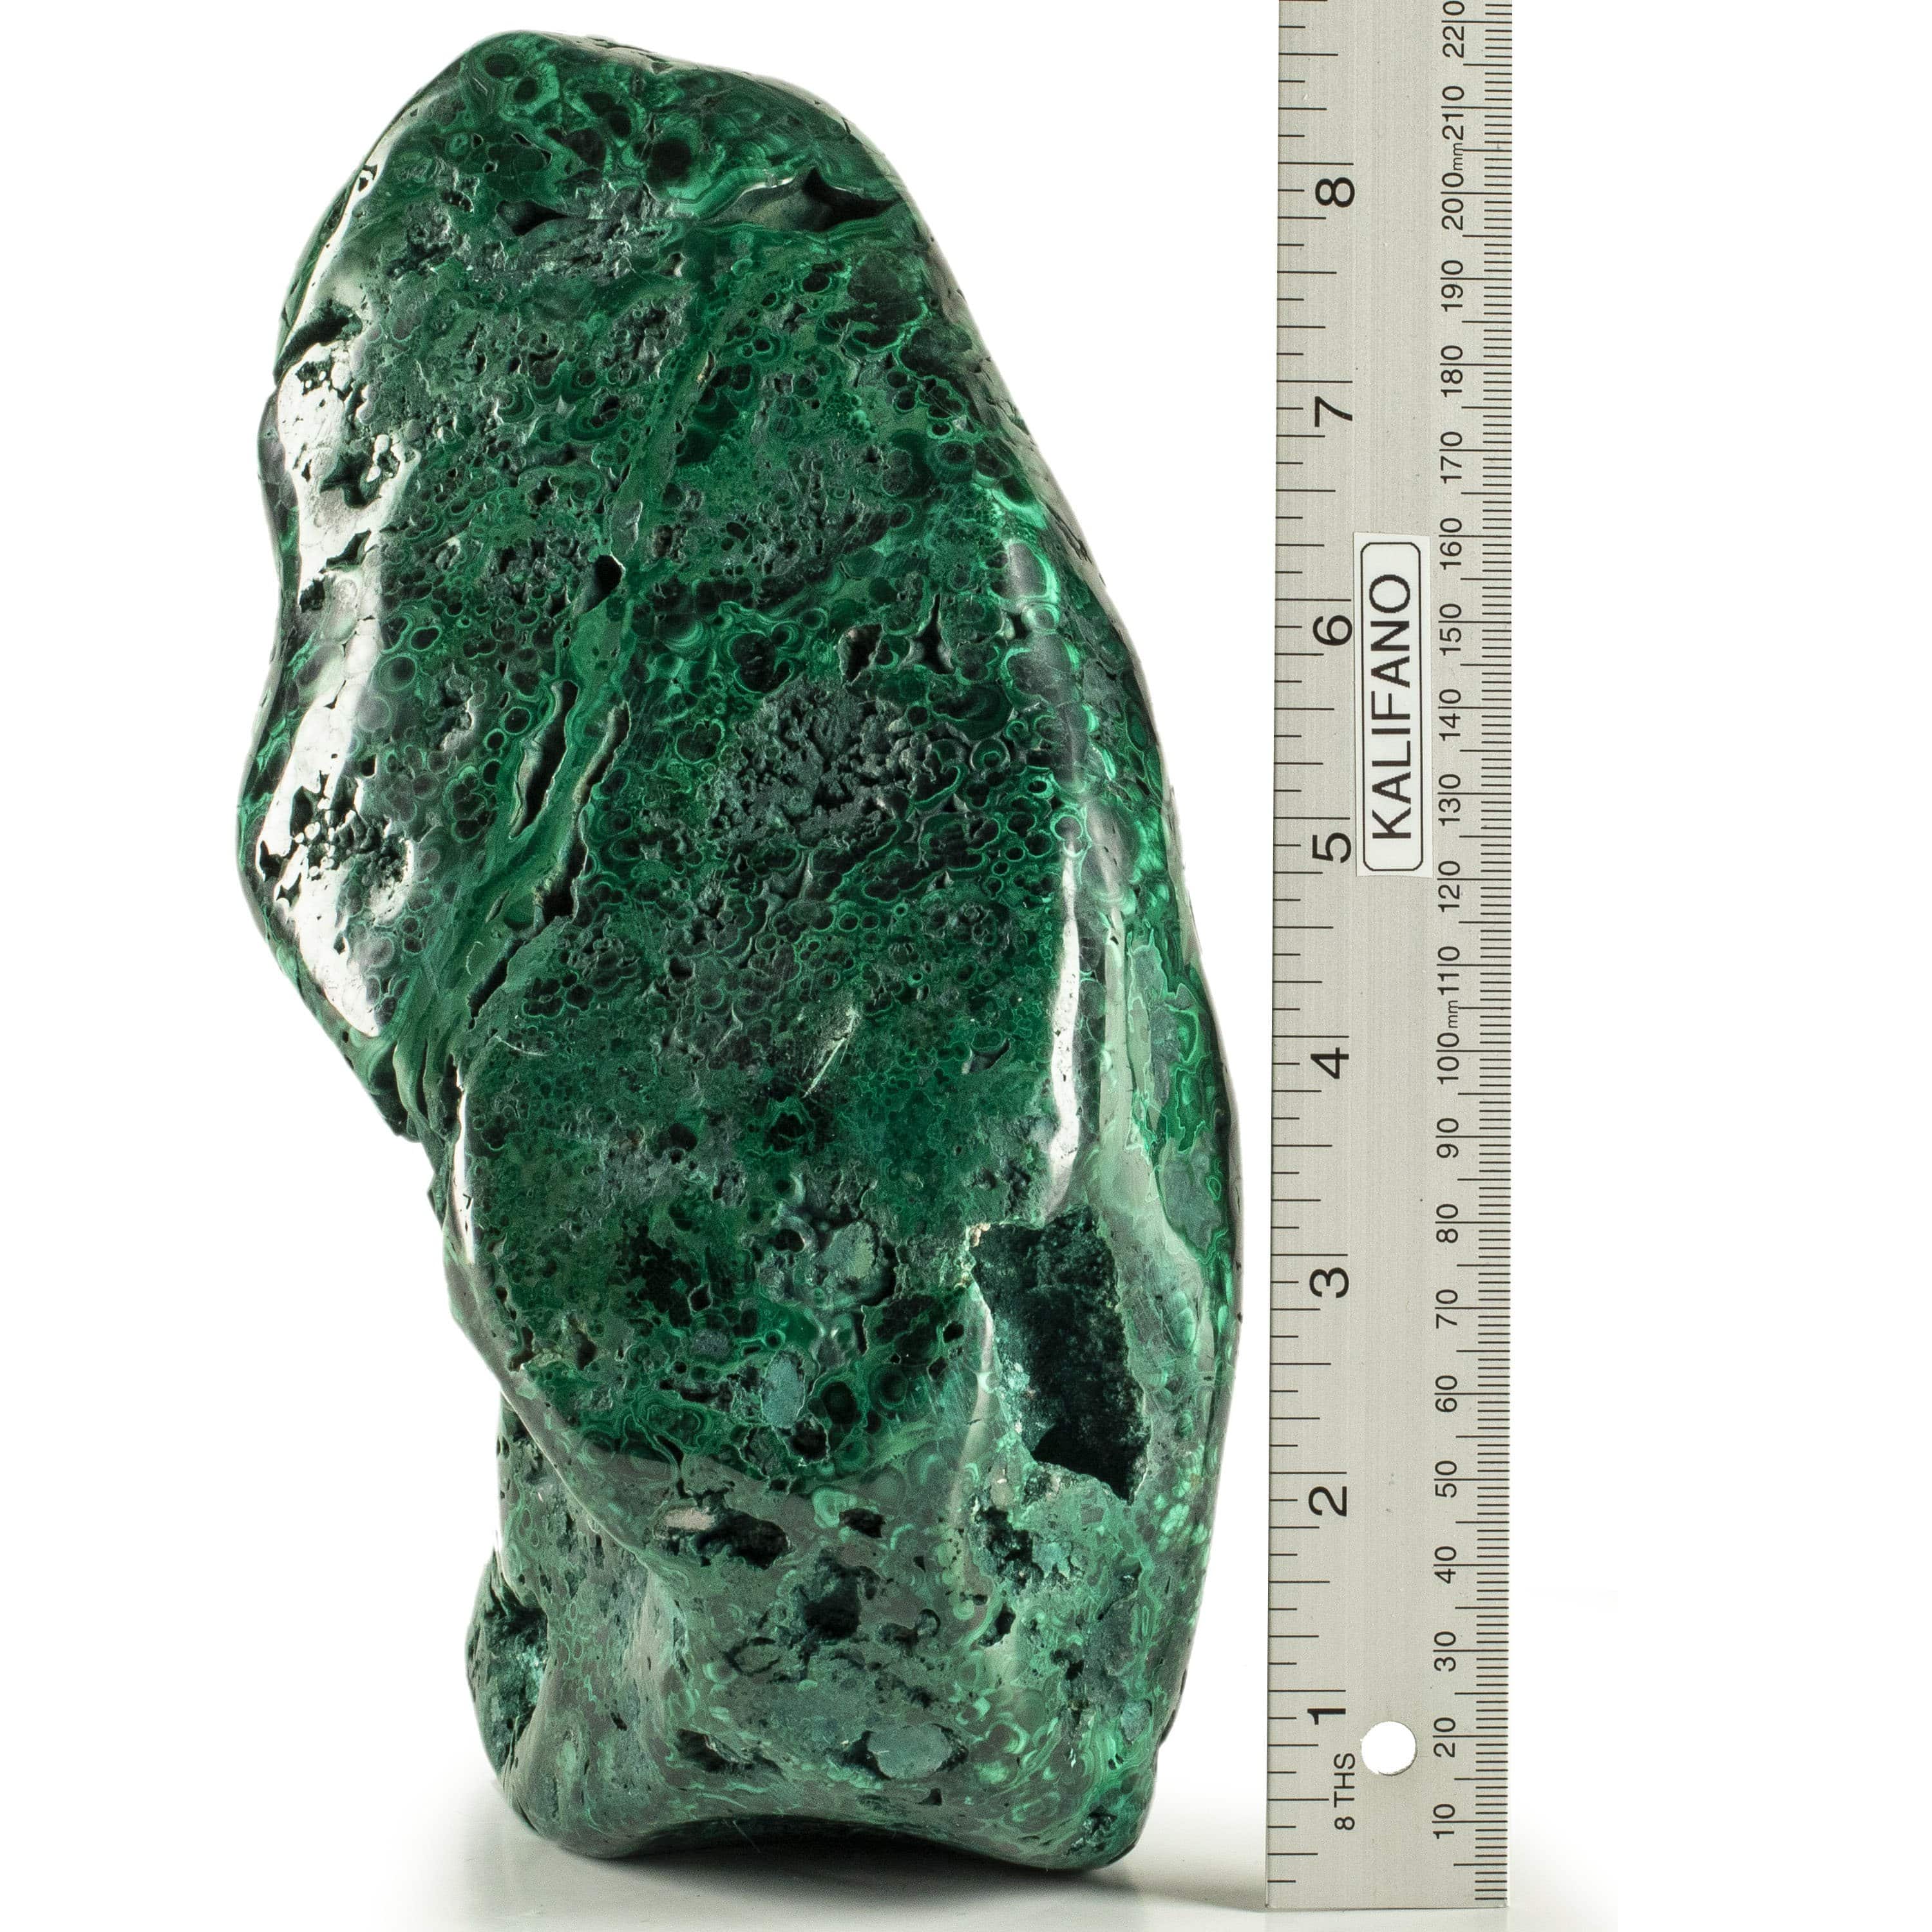 Kalifano Malachite Rare Natural Green Malachite Polished Freeform Specimen from Congo - 5.4 kg / 11.8 lbs MA3400.002